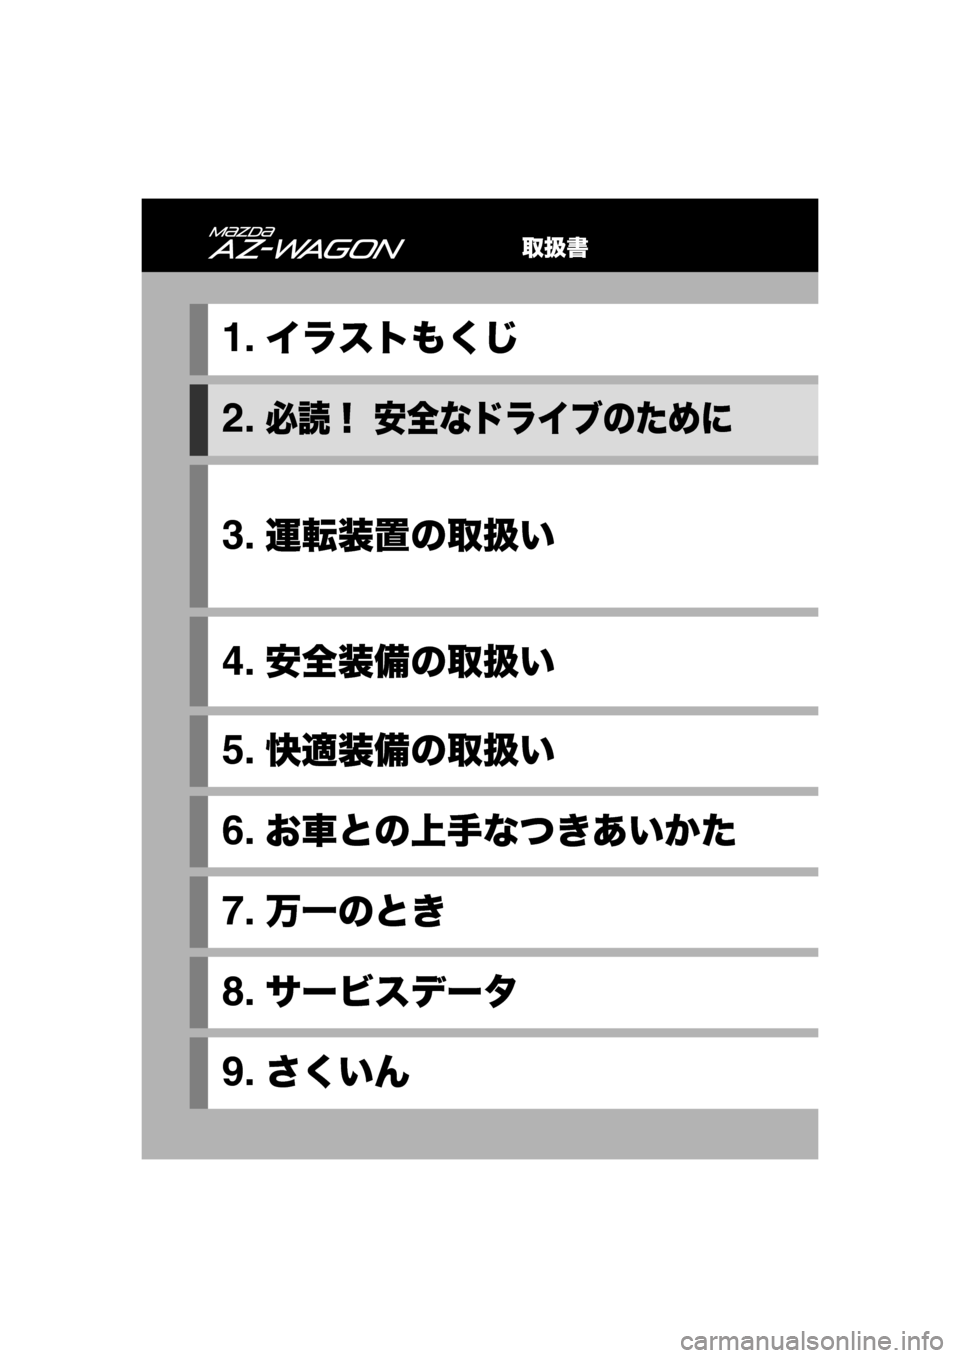 MAZDA MODEL AZ-WAGON 2011  取扱説明書 (in Japanese) 取扱書
1.イラストもくじ
2.必読！ 安全なドライブのために
3.運転装置の取扱い
4.安全装備の取扱い
5.快適装備の取扱い
6.お車との上手なつきあいか�